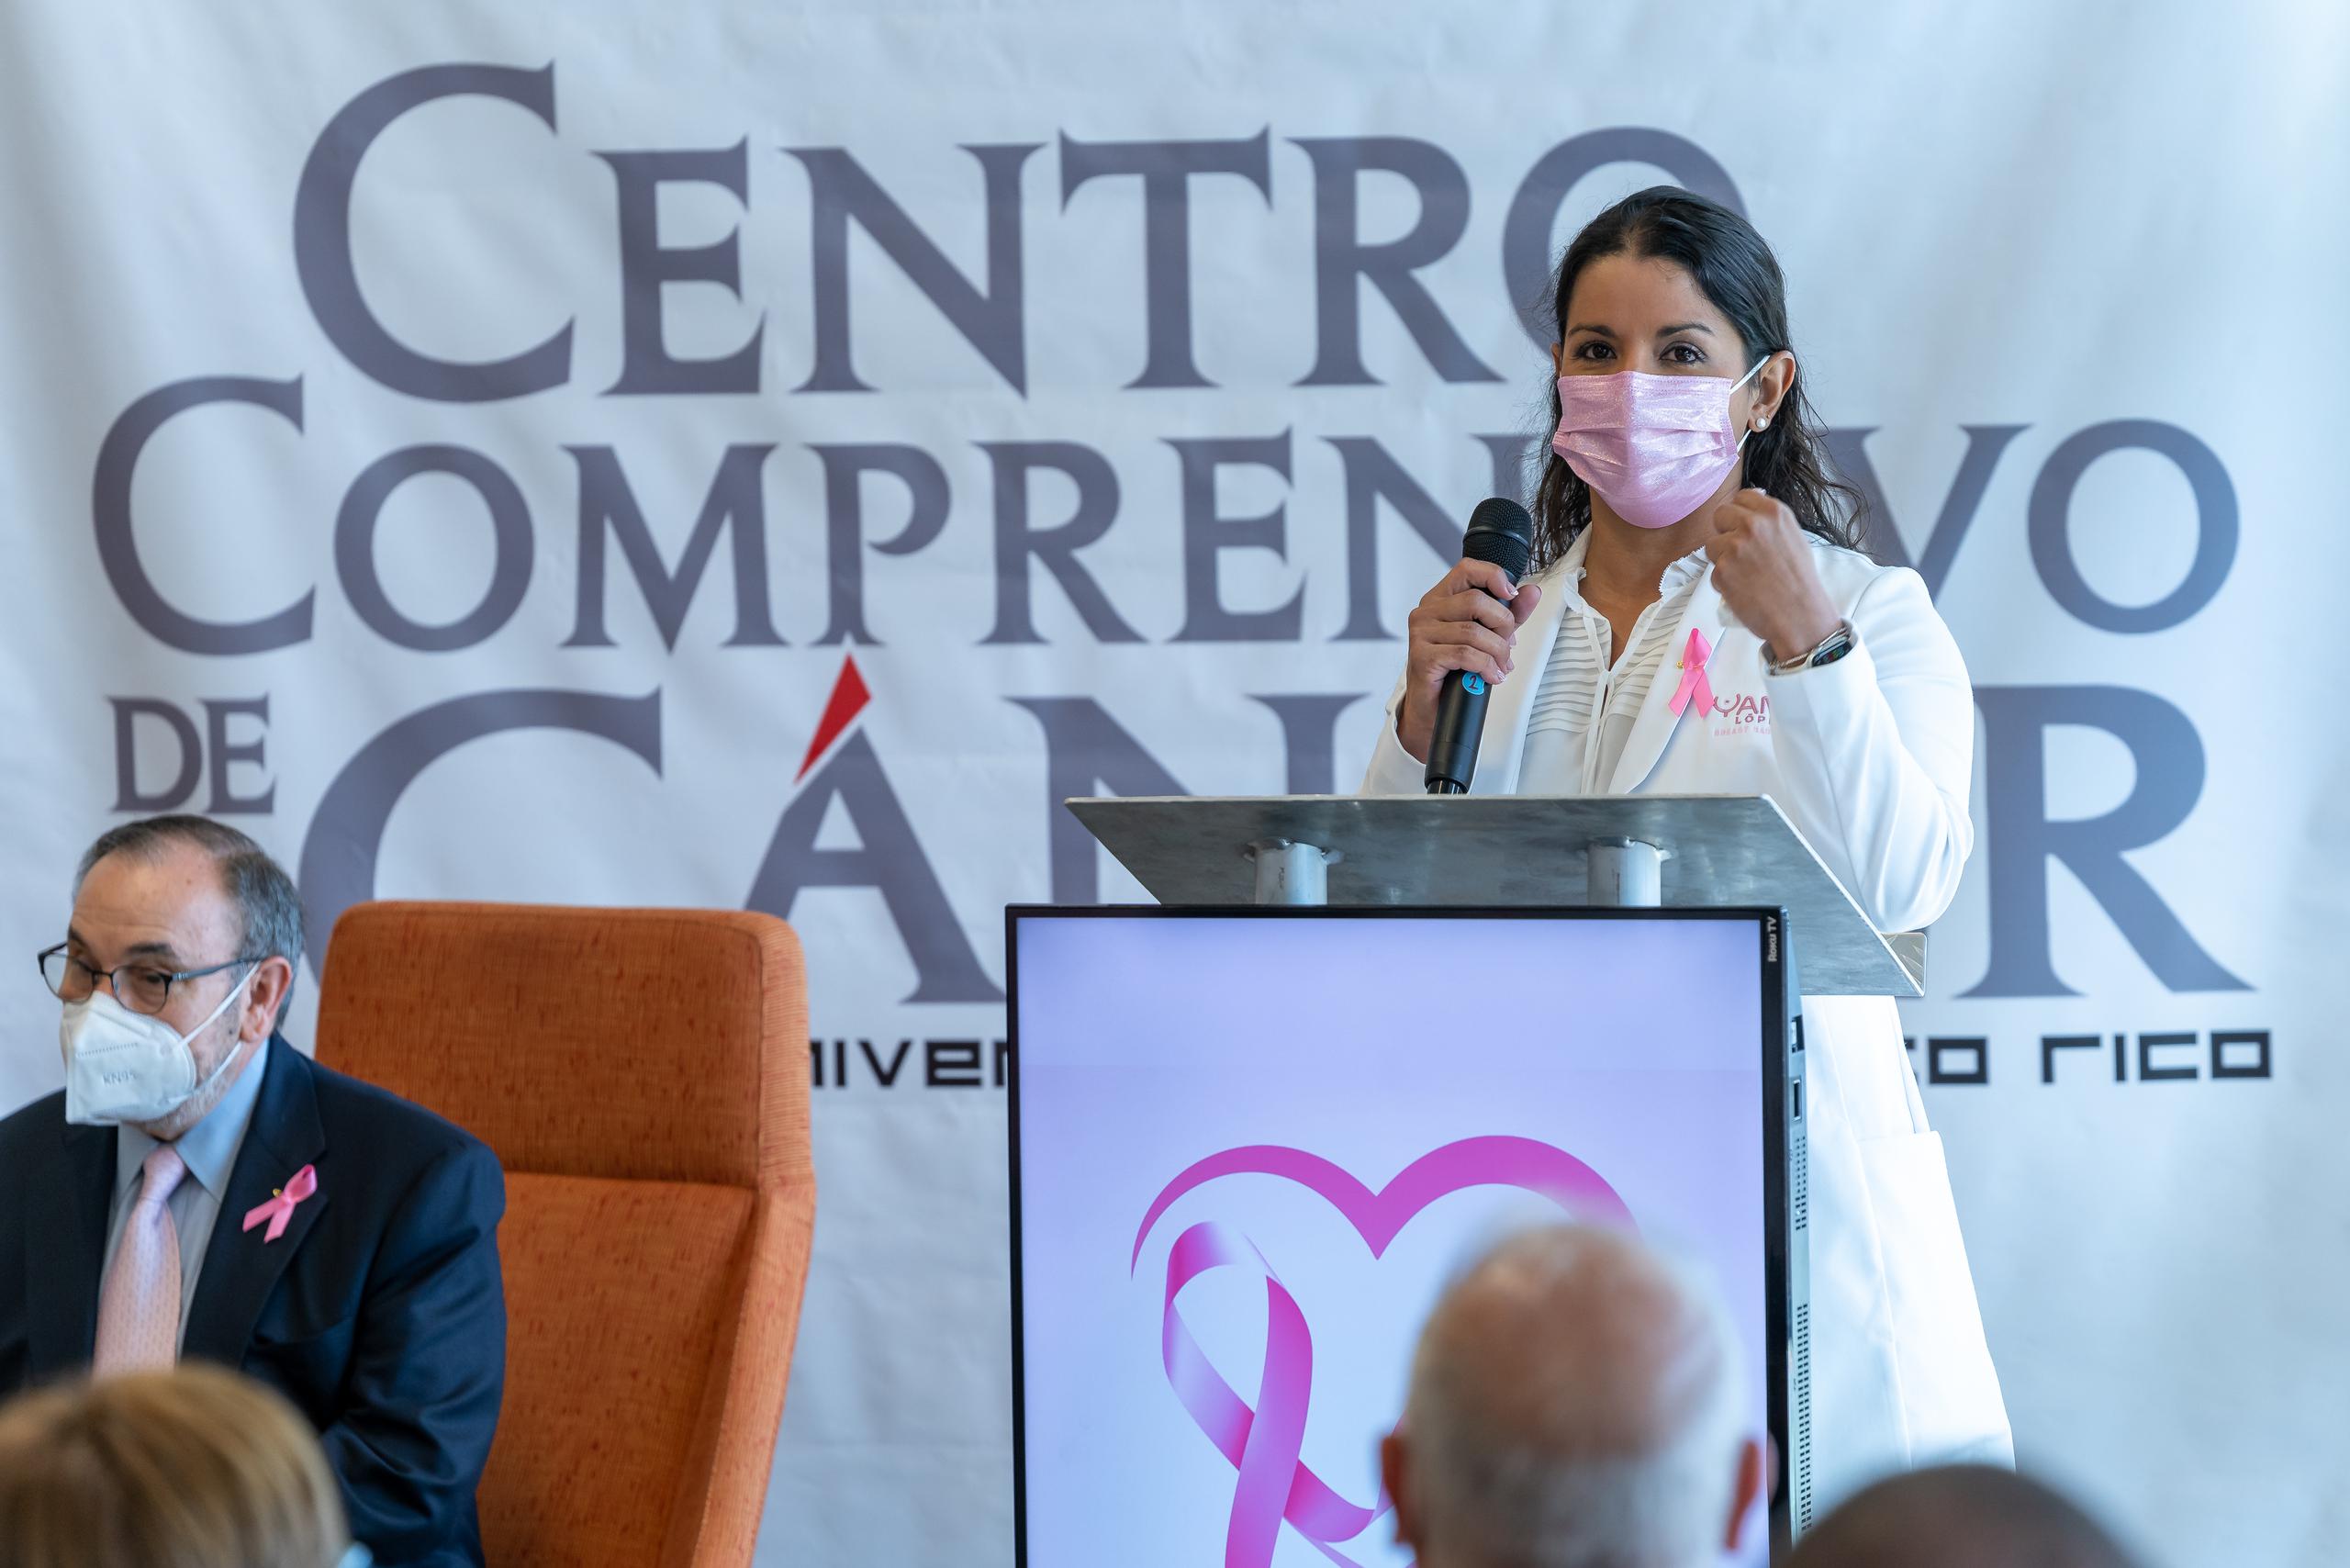 Dra. Yania Lopéz, radióloga del Centro Comprensivo de Cáncer.